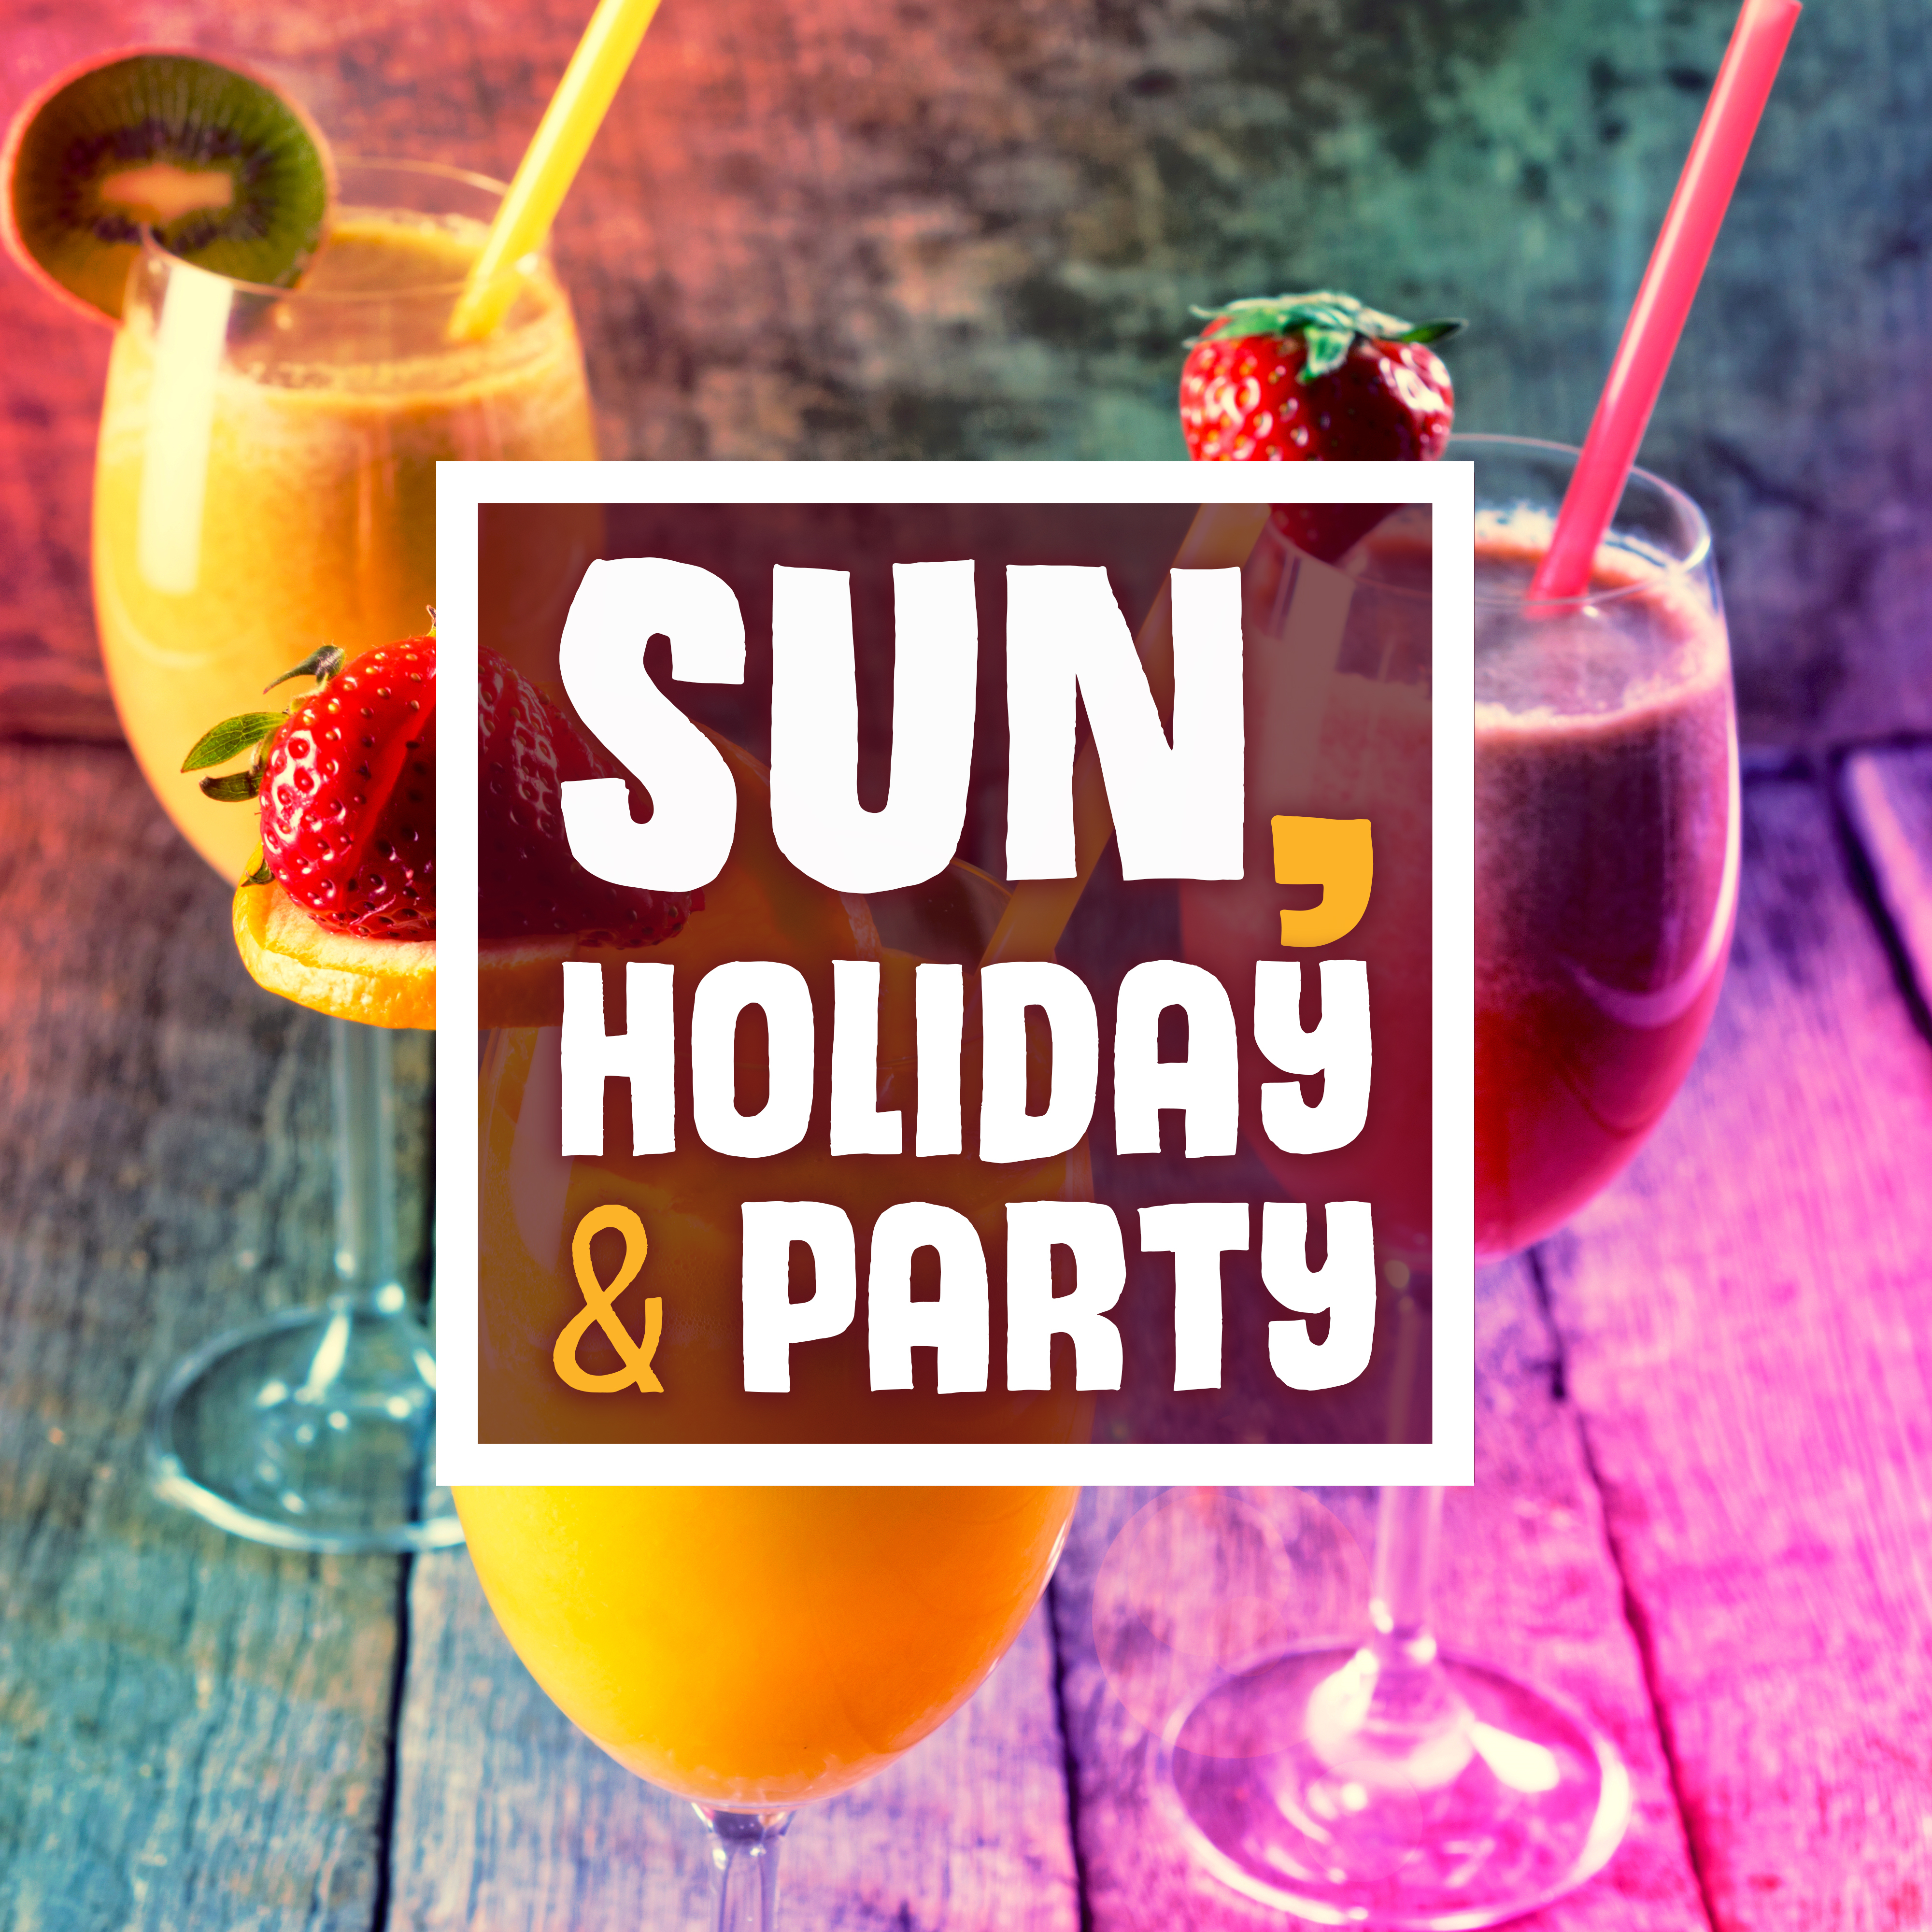 Sun, Holiday & Party – Ibiza 2017, Hot Summer, Ibiza Lounge, Dance Music, Exotic Relax